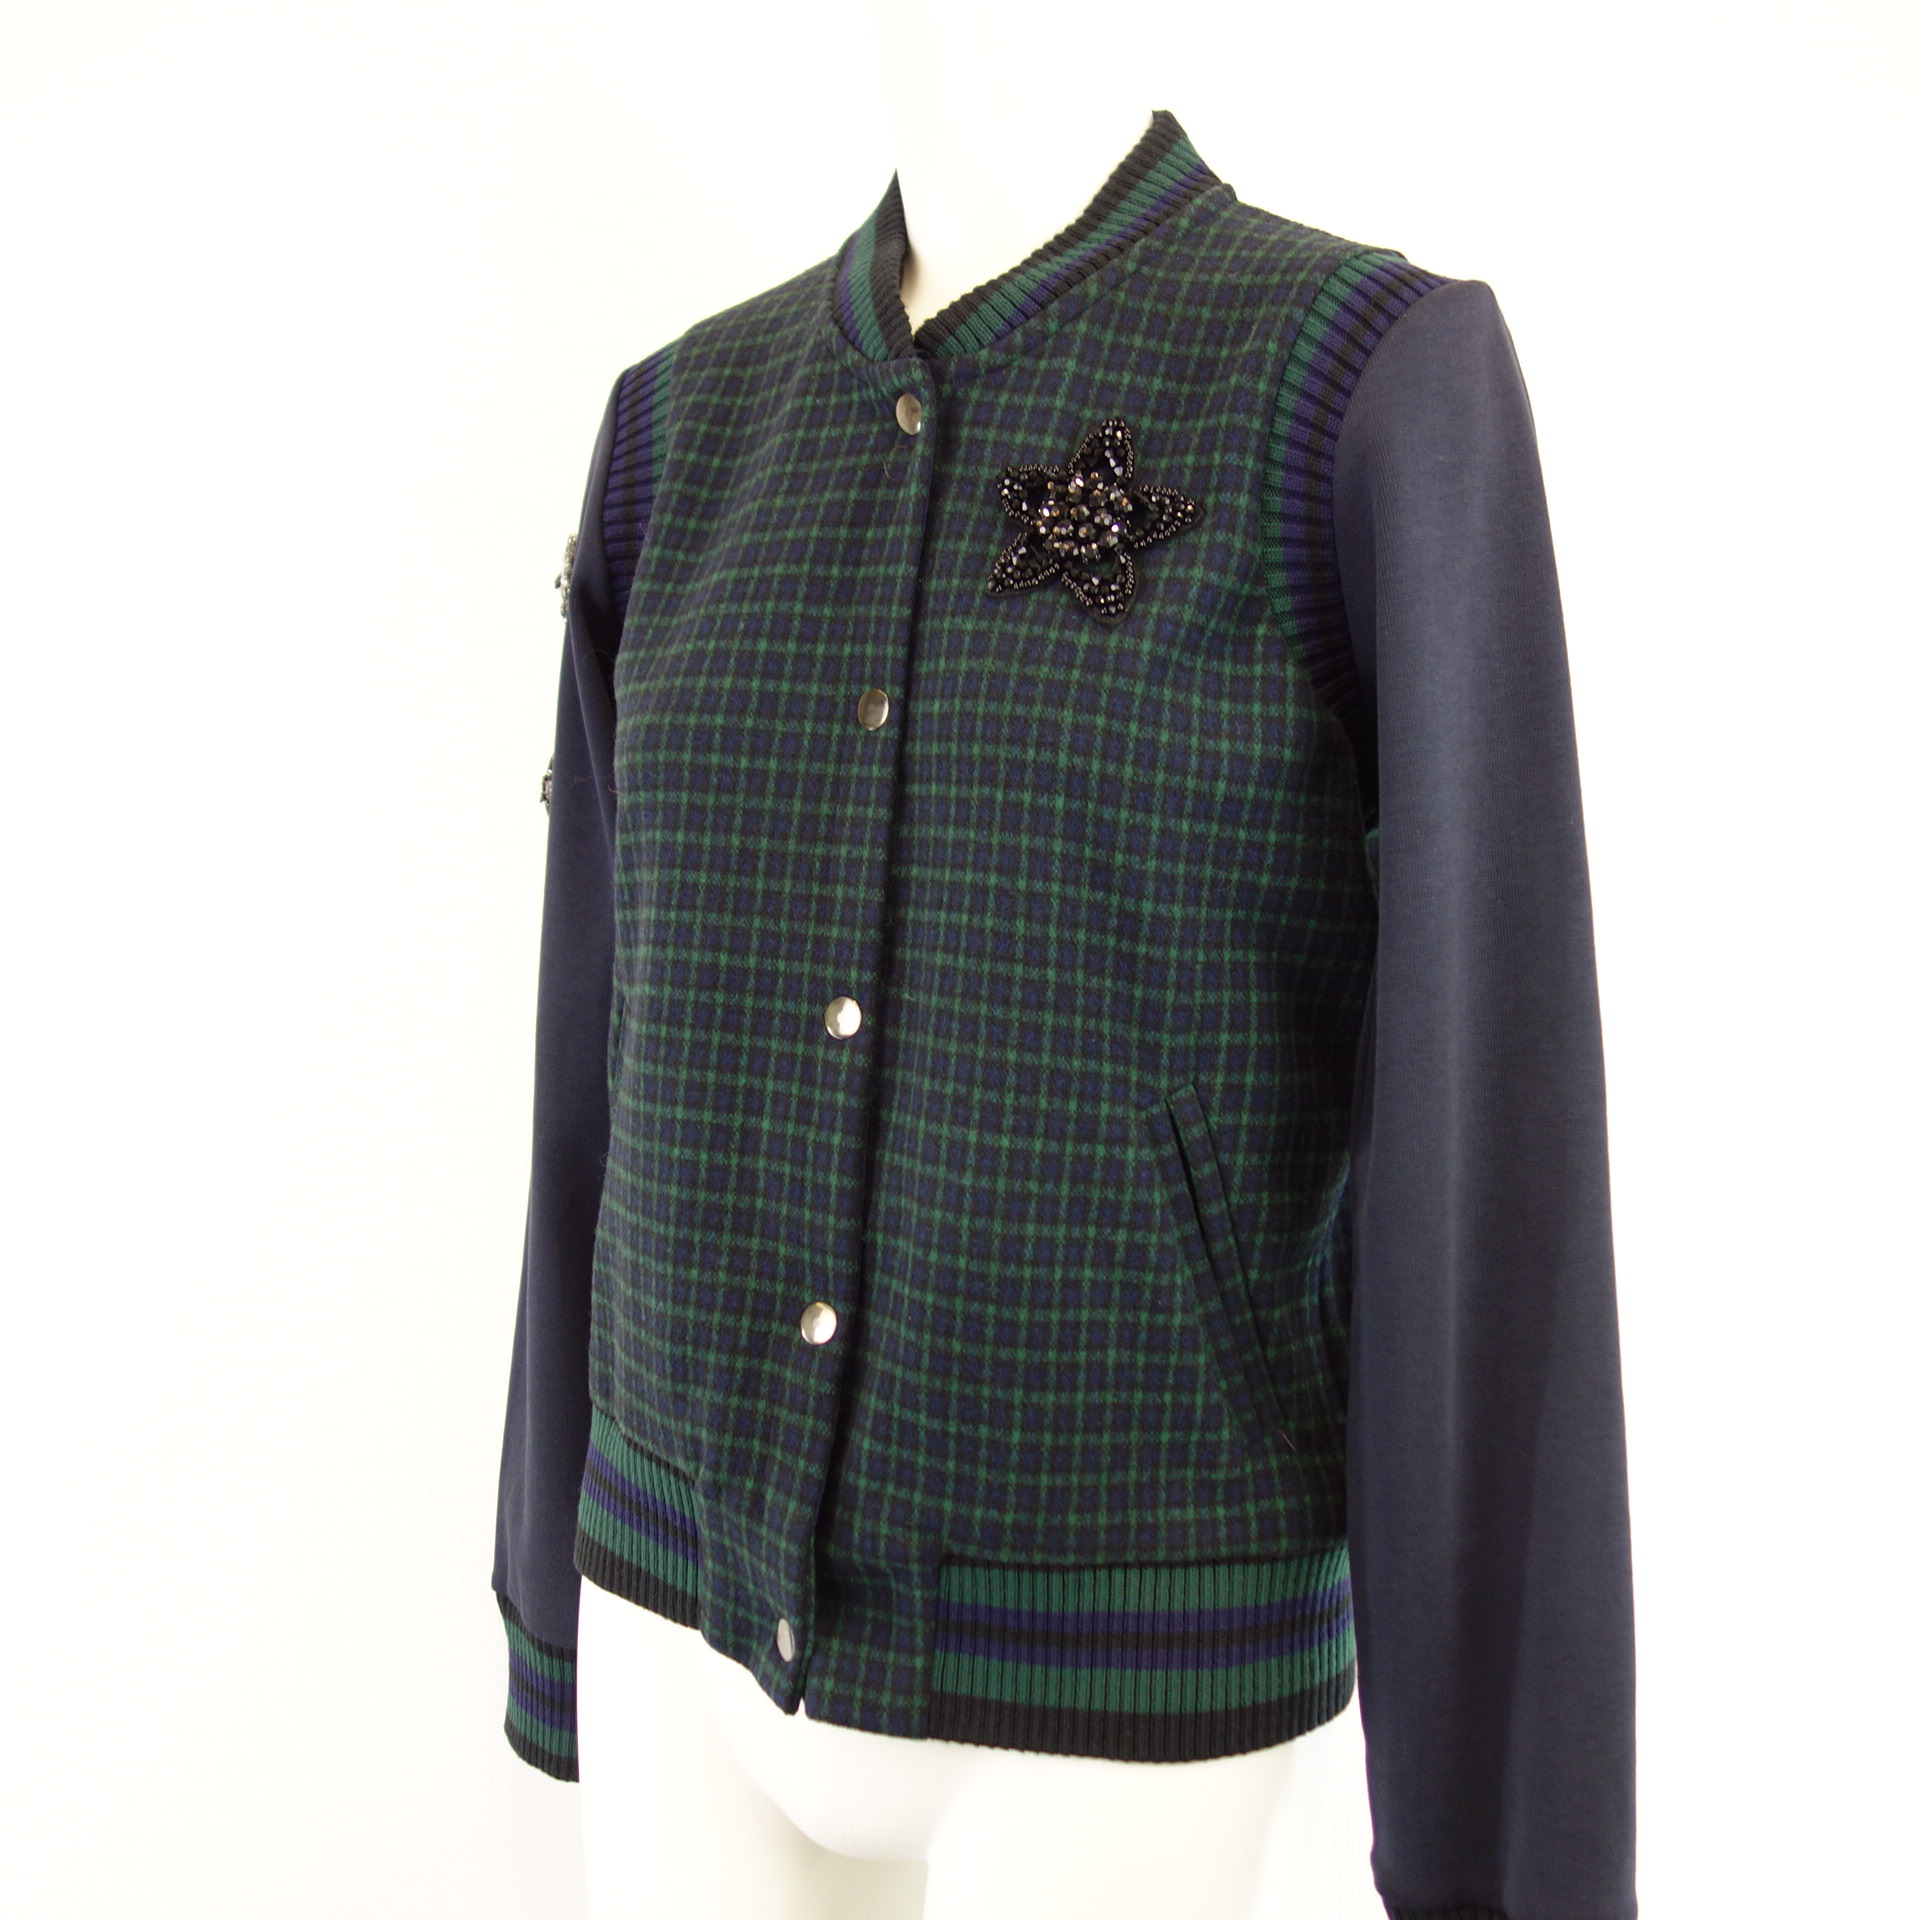 RICH & ROYAL Damen Jacke Damenjacke Blouson College Style Grün Blau Kariert